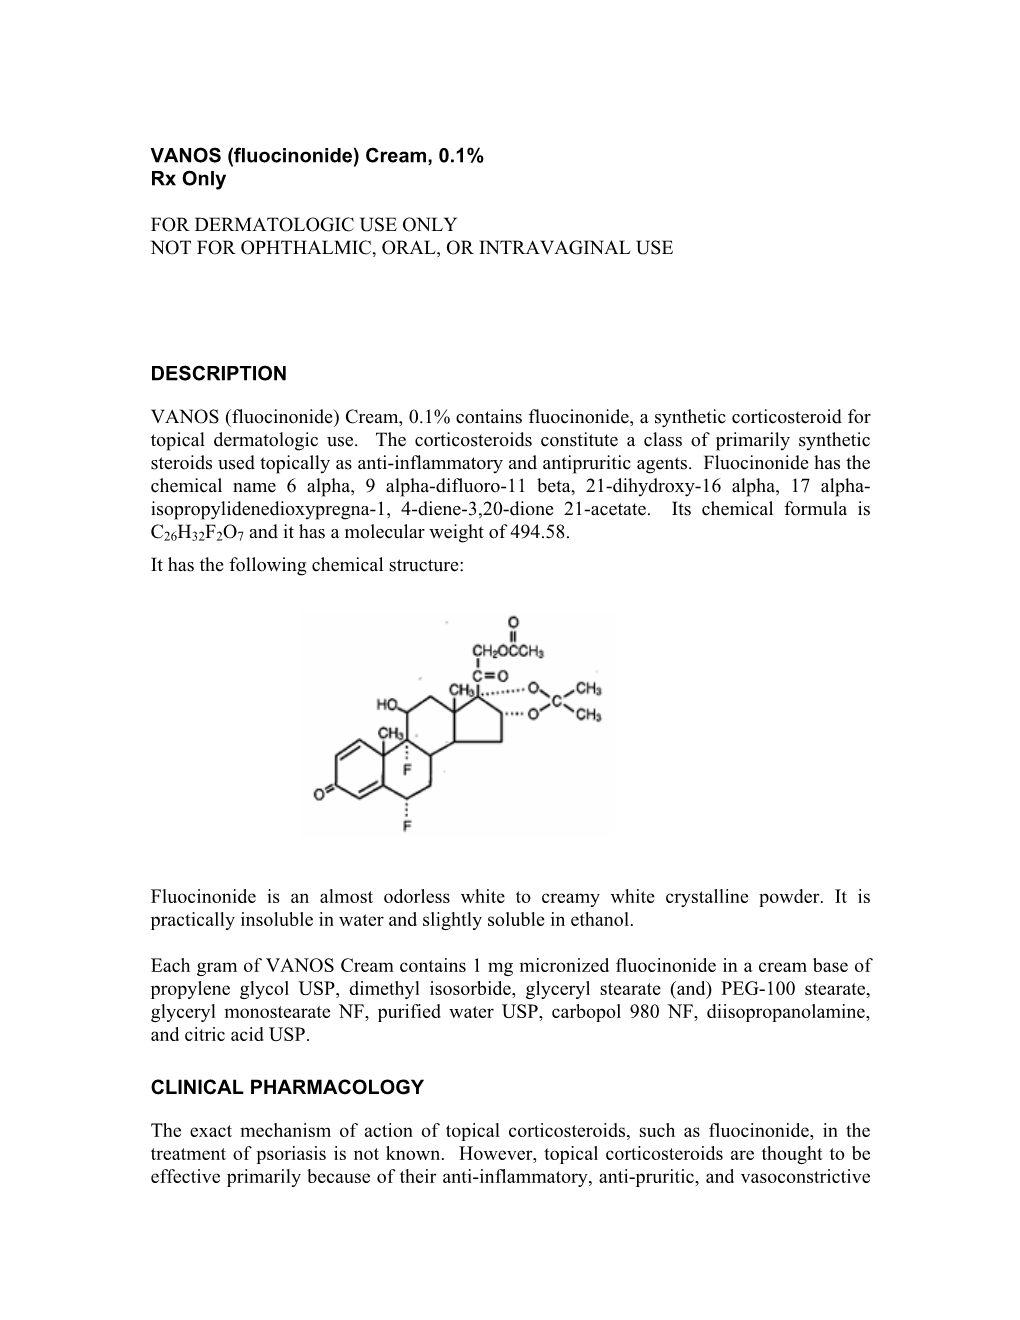 VANOS (Fluocinonide) Cream, 0.1% Rx Only for DERMATOLOGIC